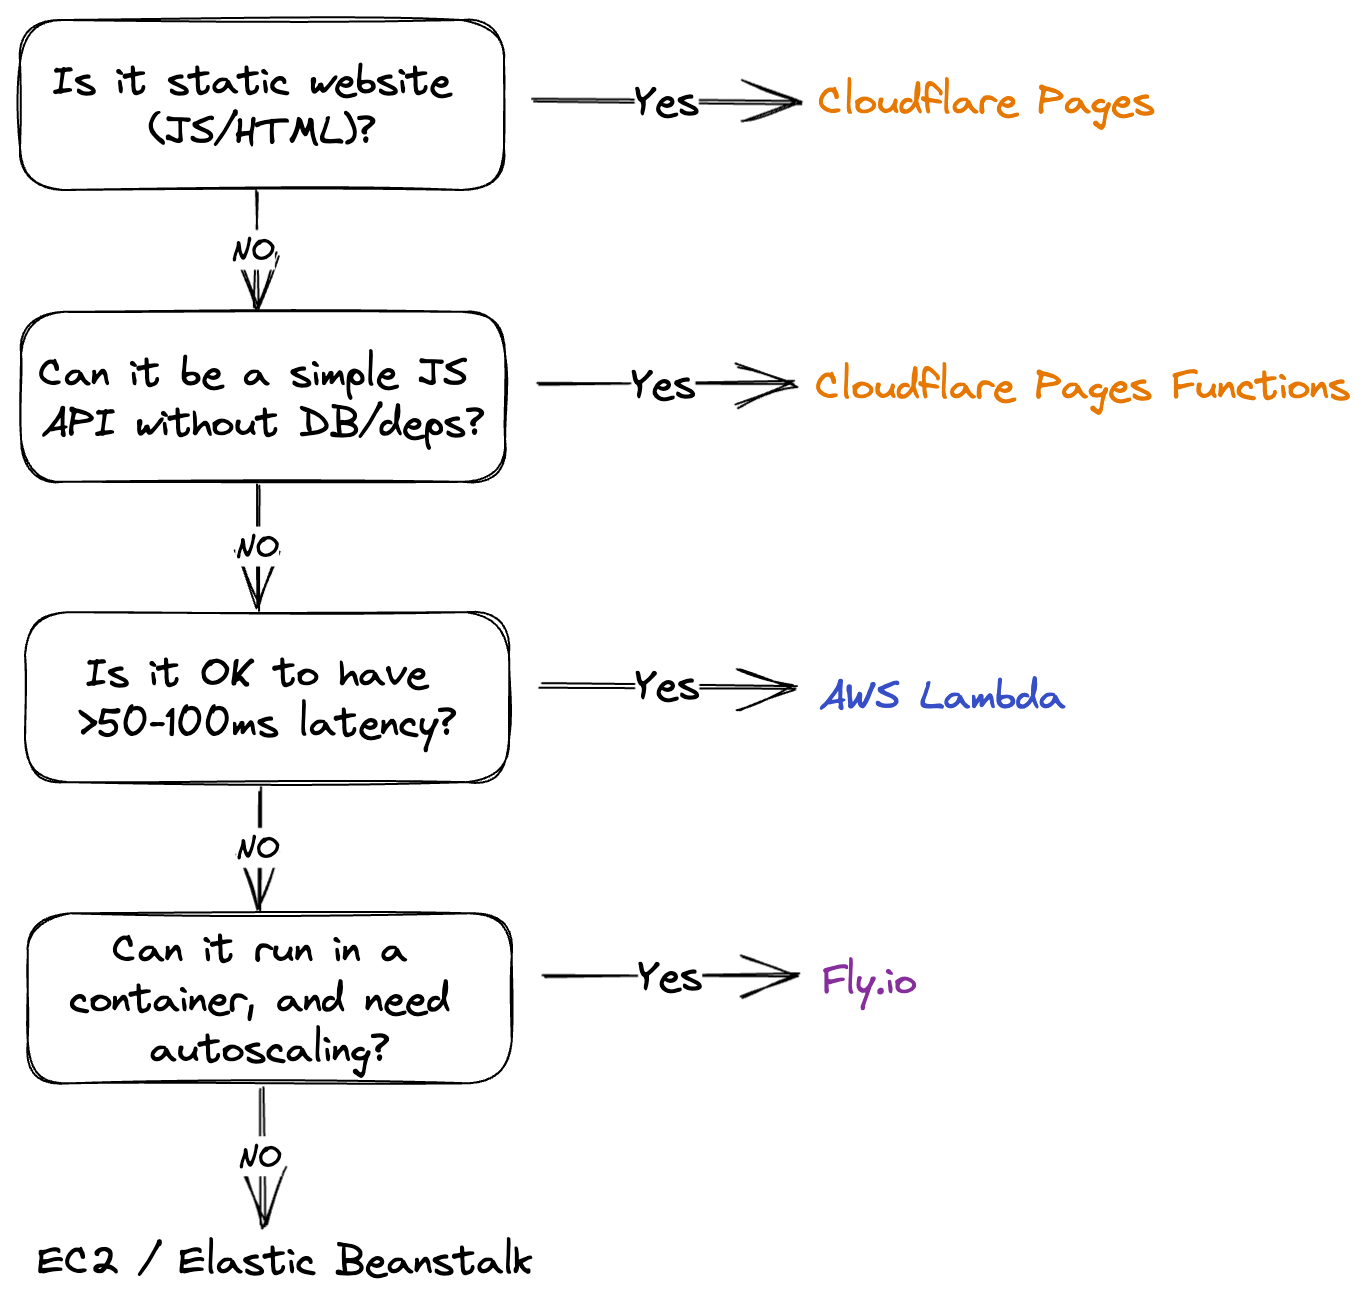 Platform decision tree